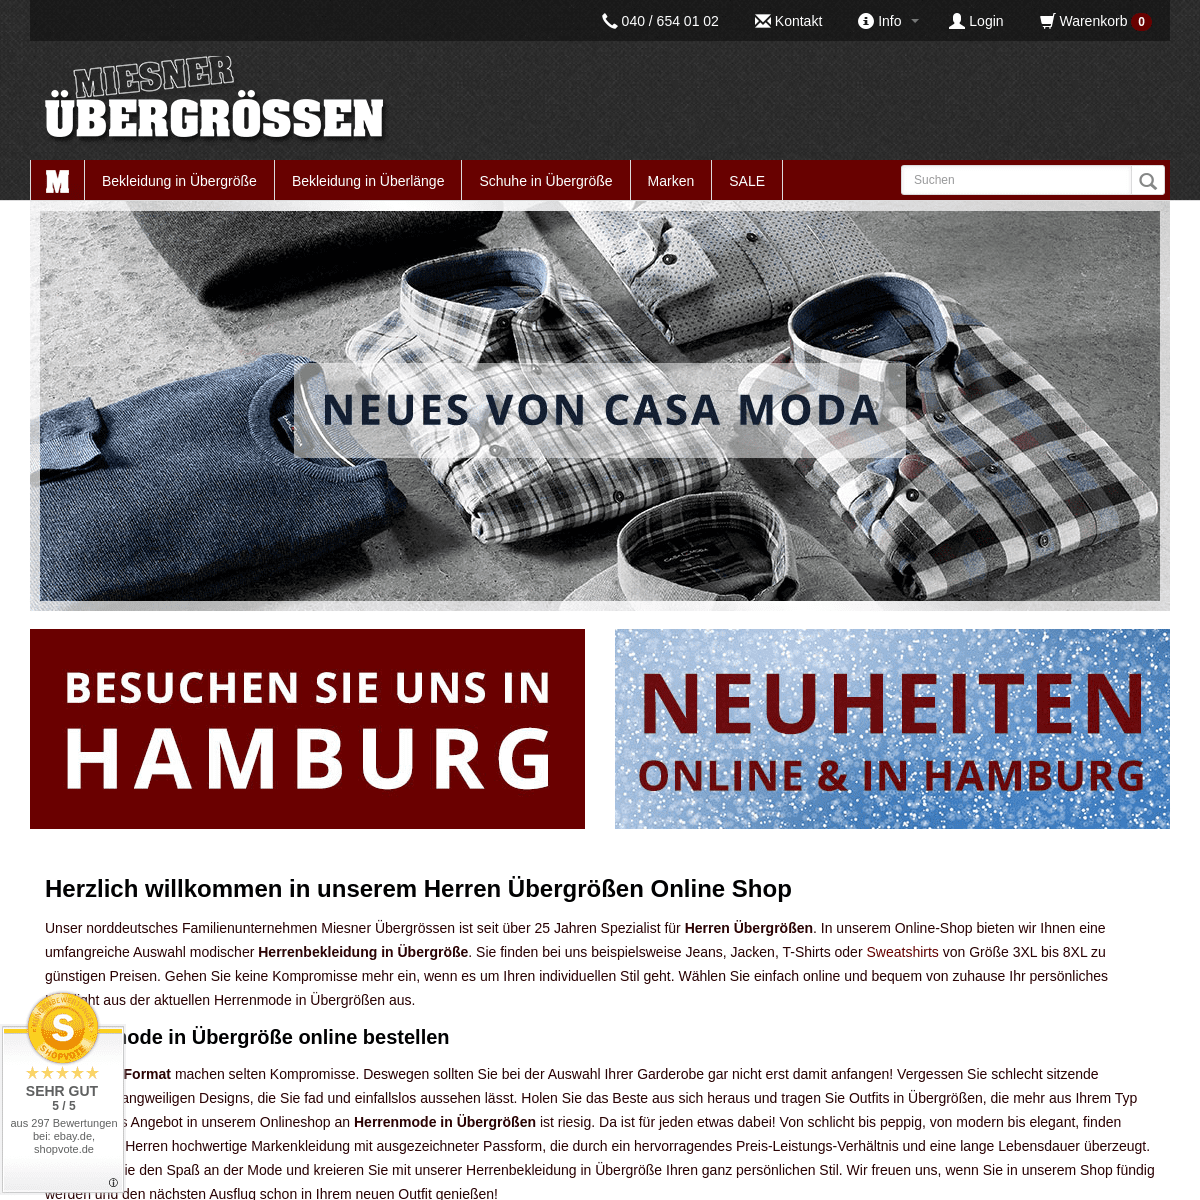 A complete backup of uebergroessen-miesner.de